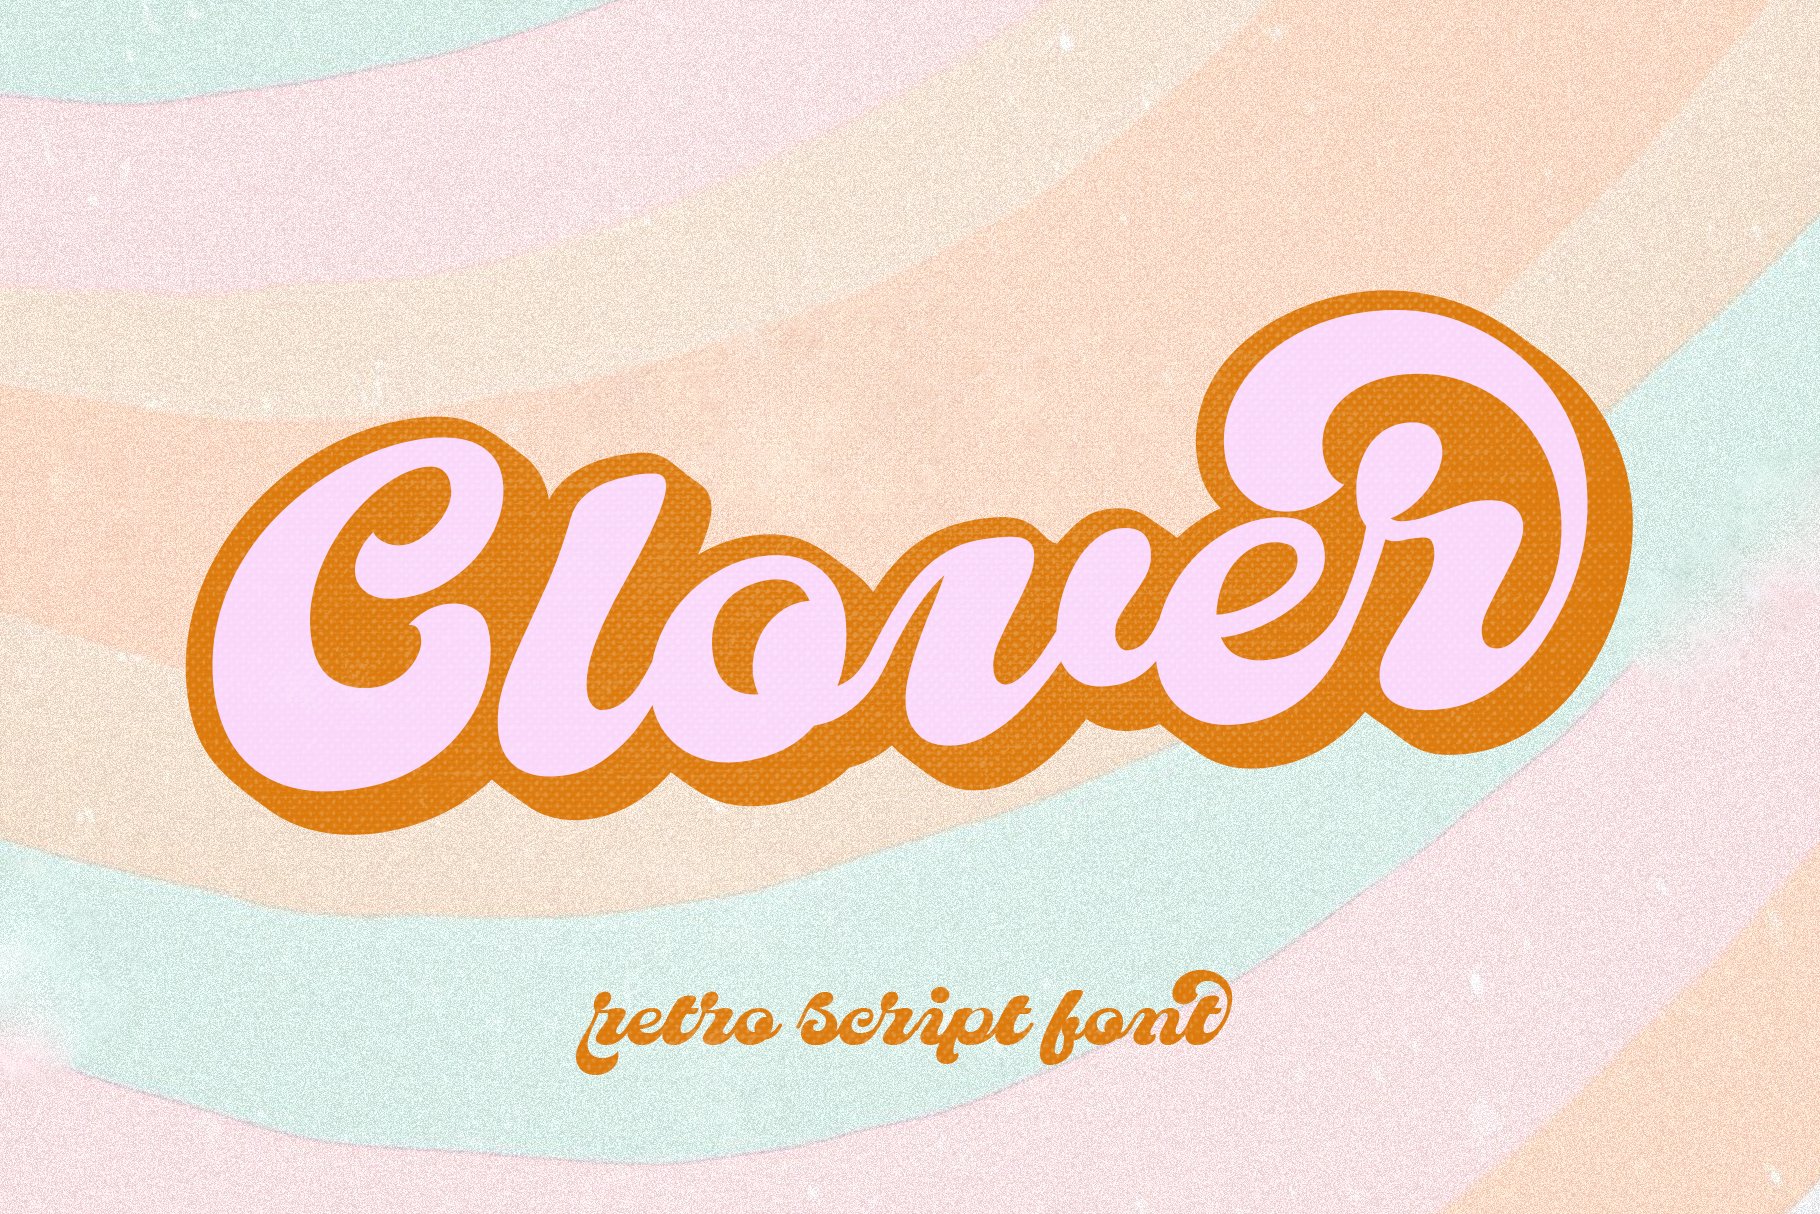 Clover | Retro Script Font cover image.